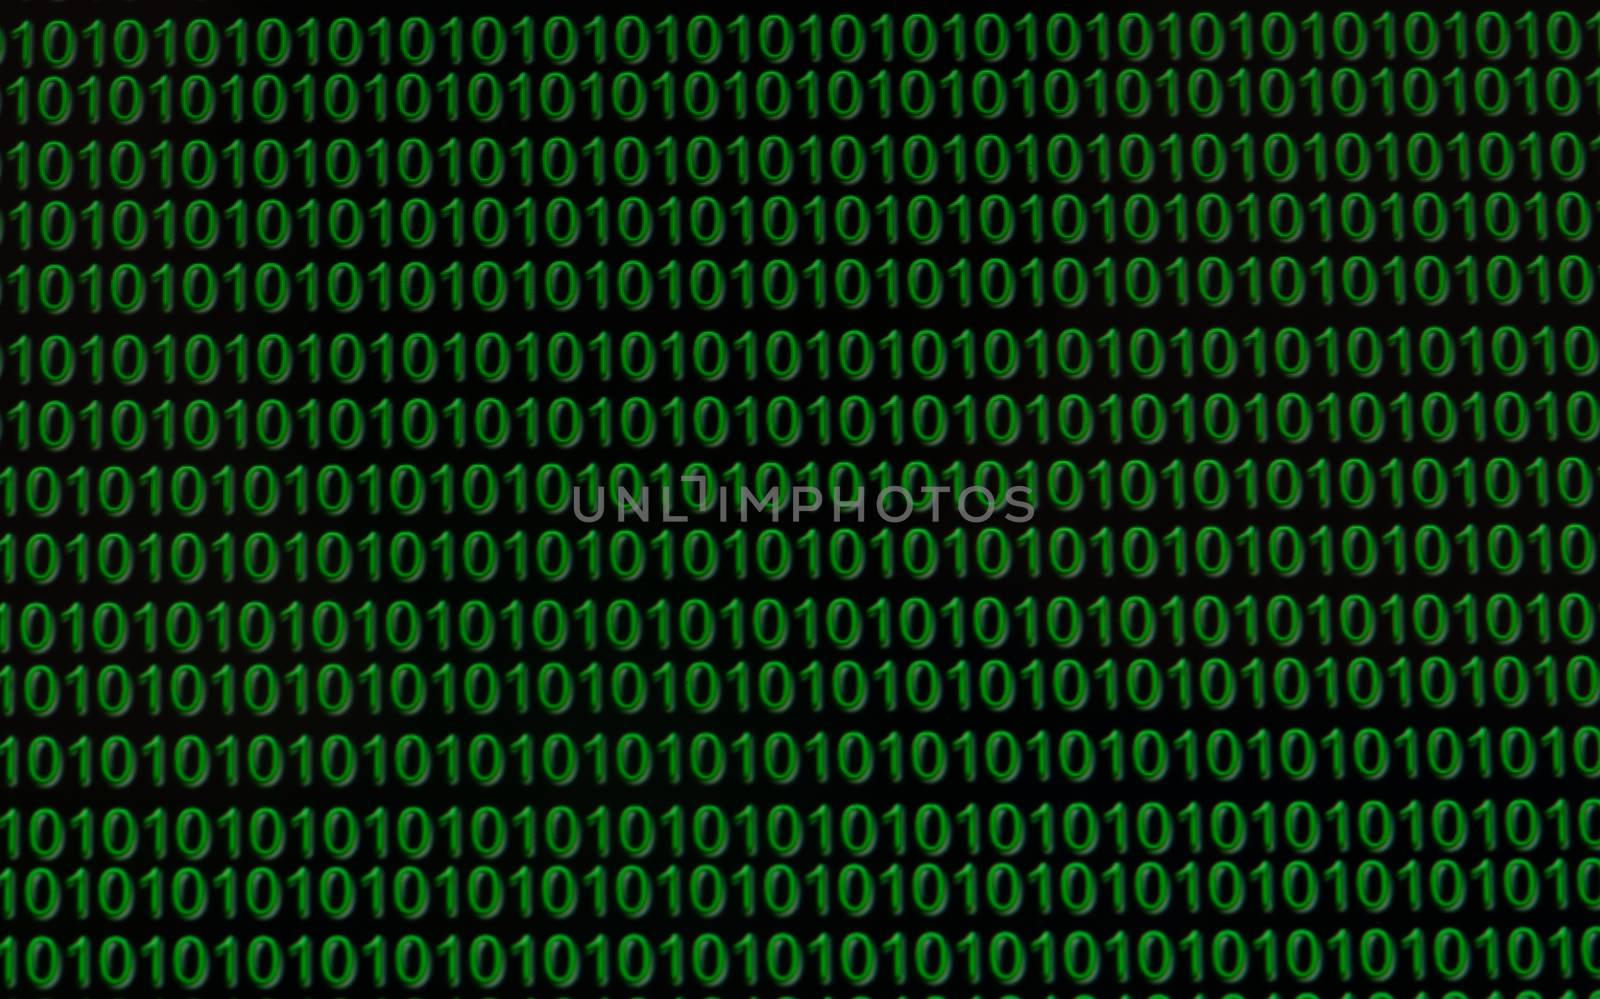 Green computer language binary numbers glow on black background.